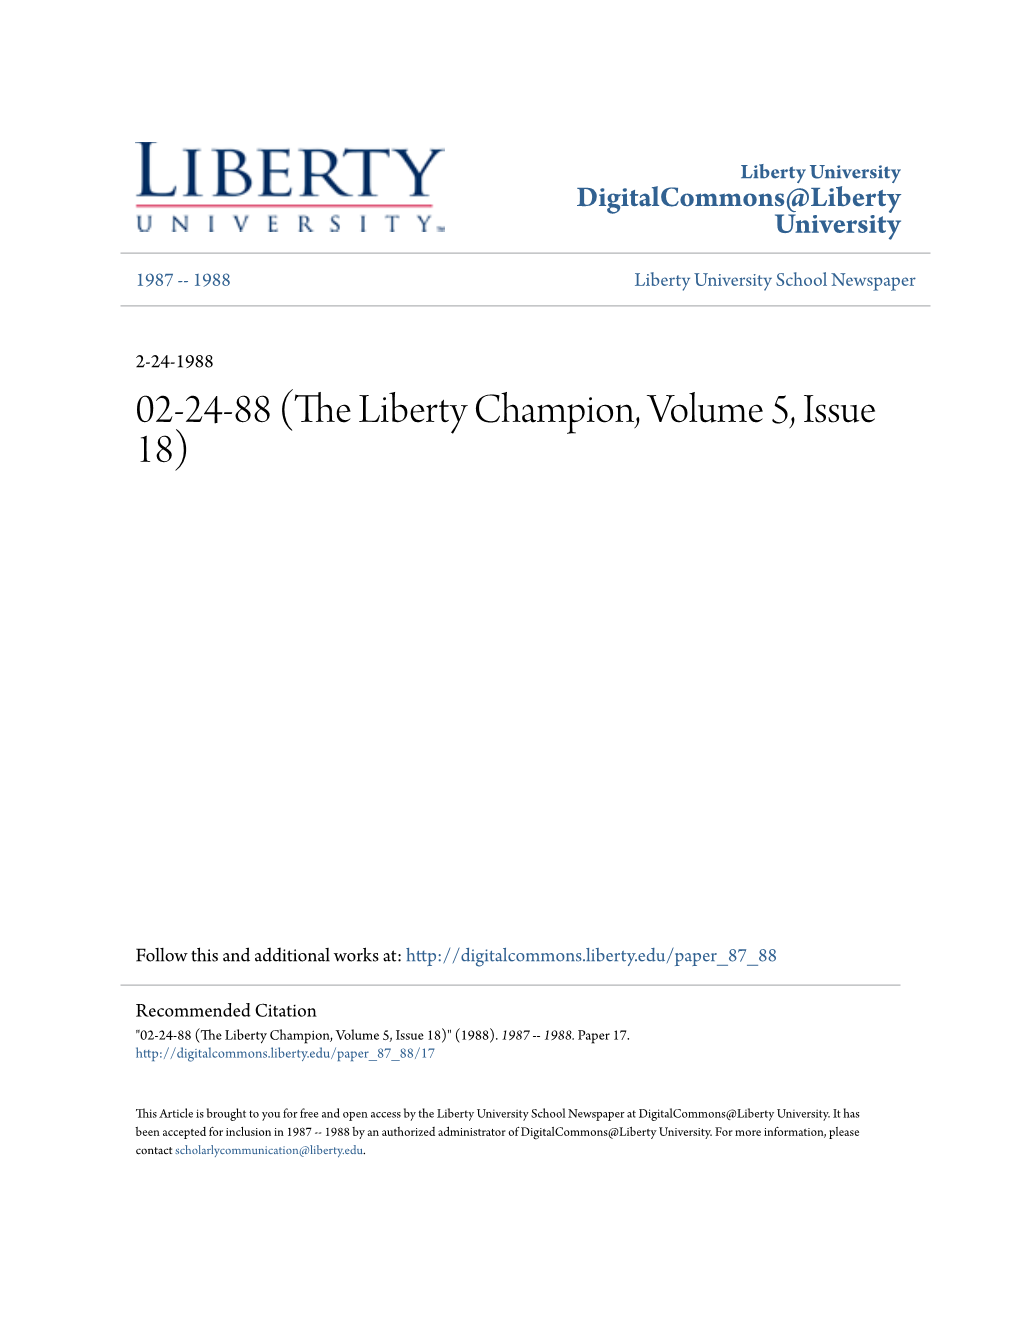 The Liberty Champion, Volume 5, Issue 18)